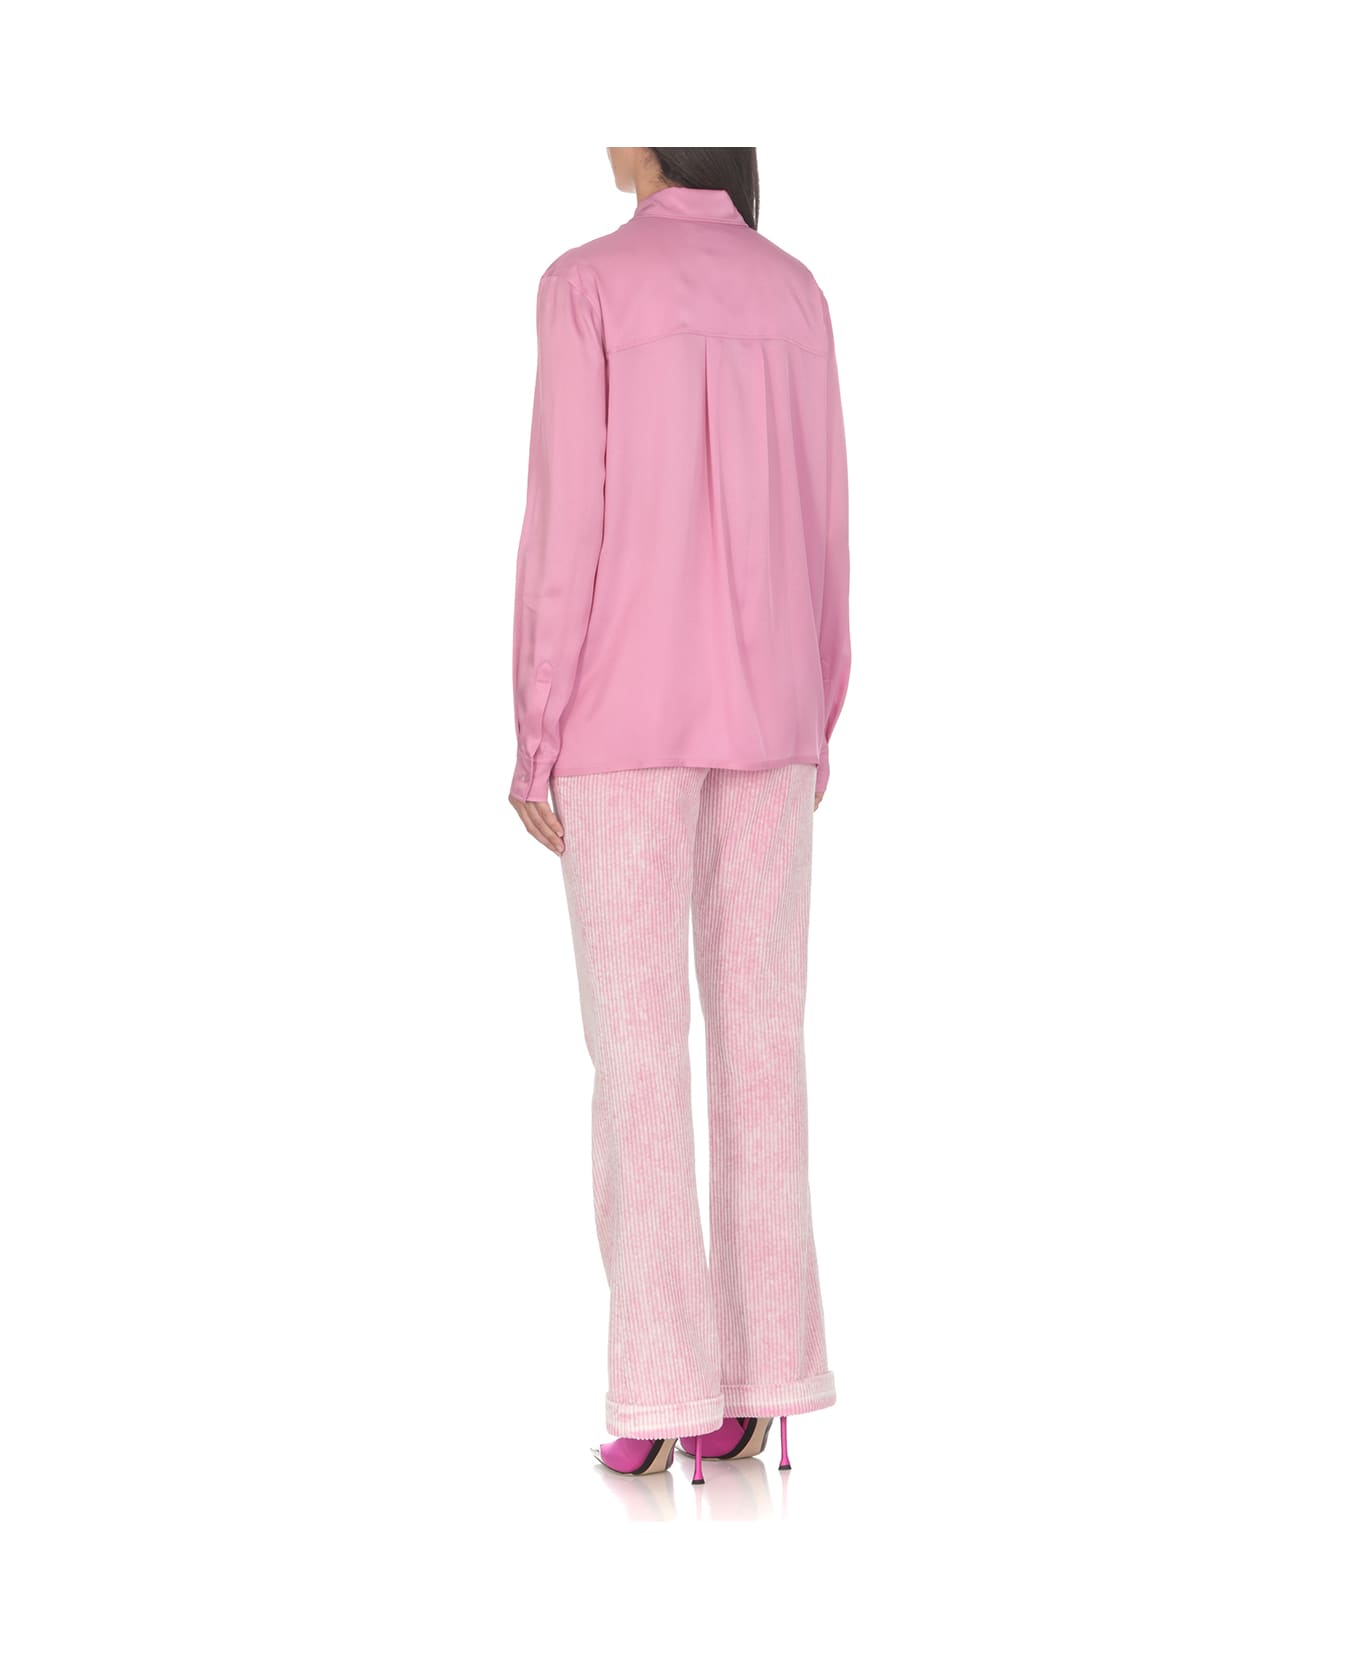 M05CH1N0 Jeans Silk Blend Shirt - Pink